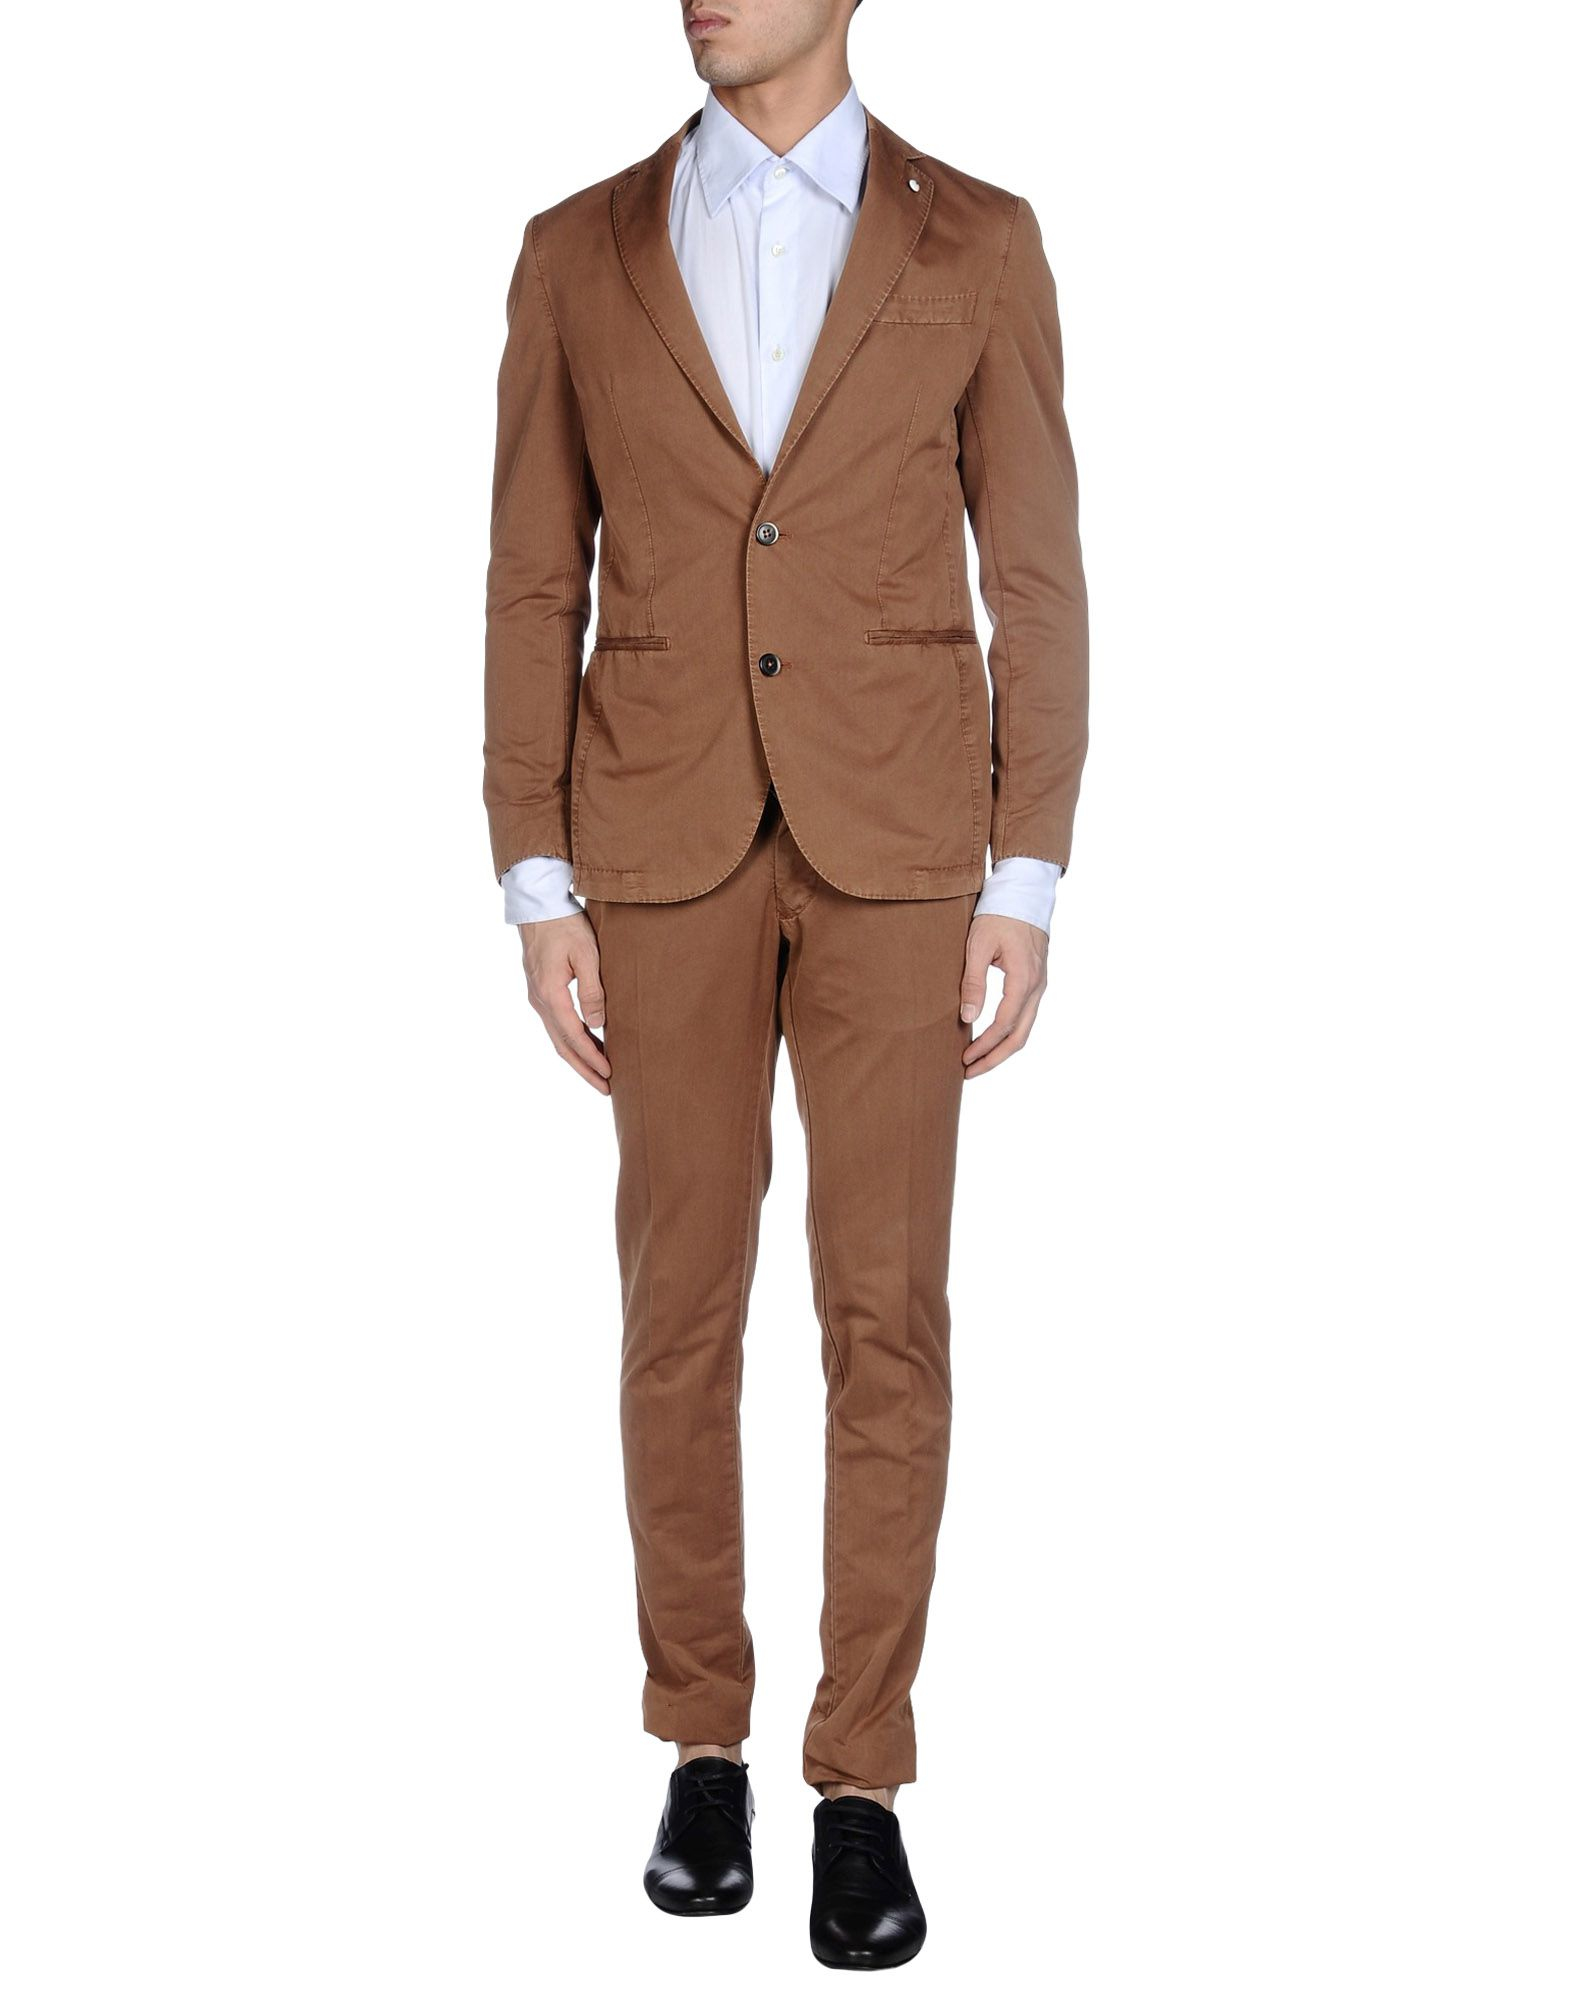 L.B.M. 1911 Cotton Suit in Brown for Men - Lyst